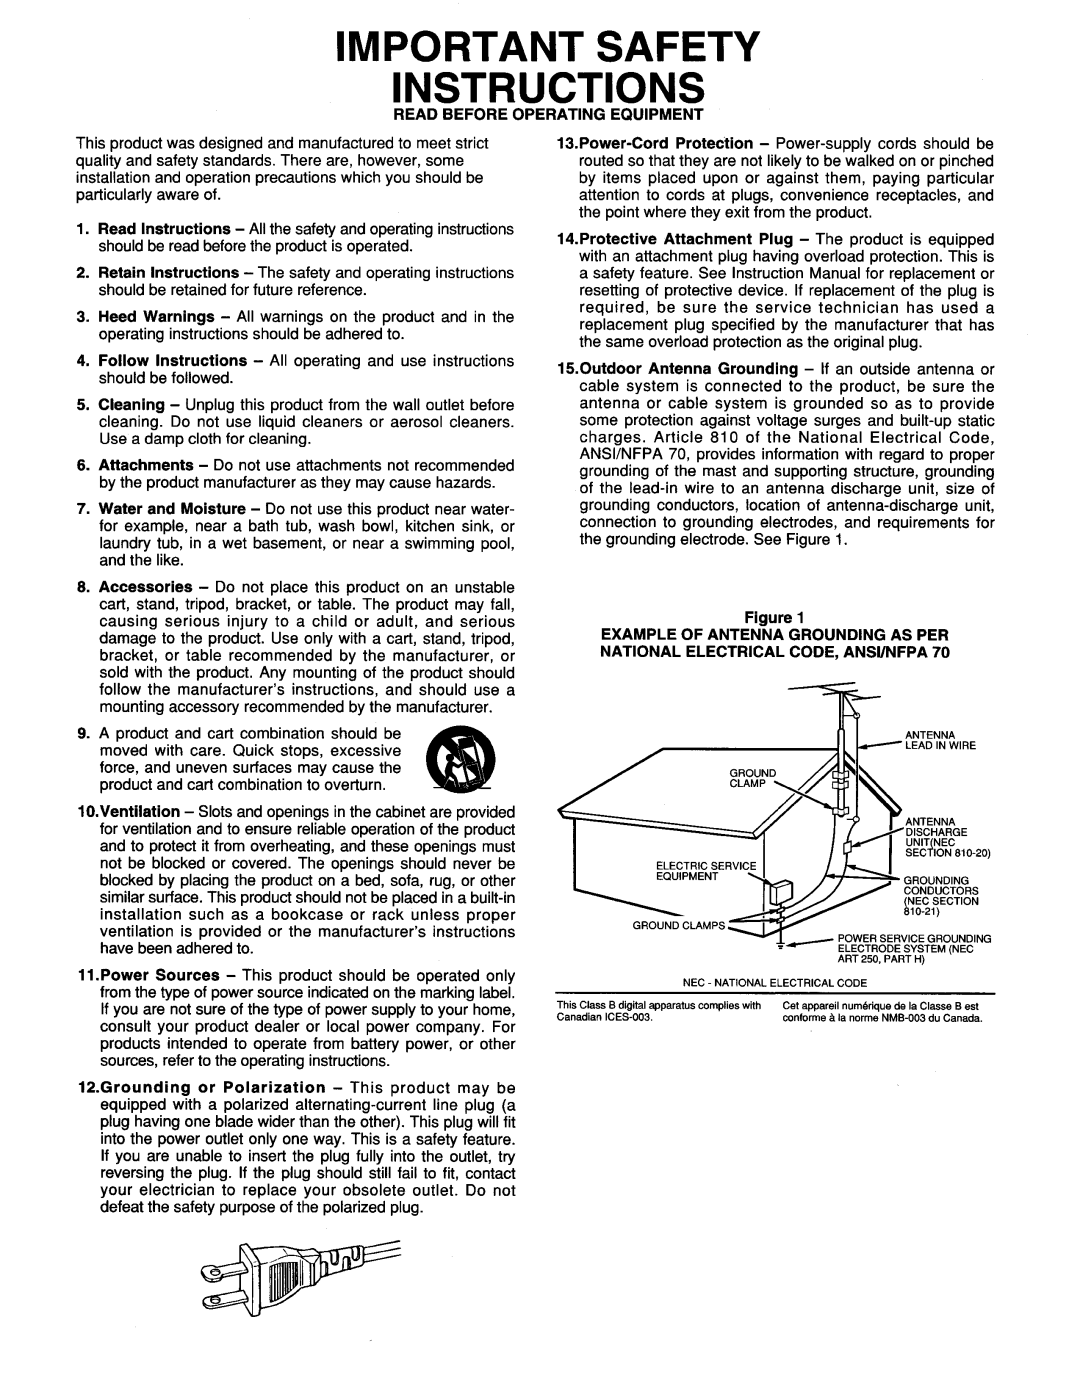 Marantz ZS5300 manual Important Safety Instructions 